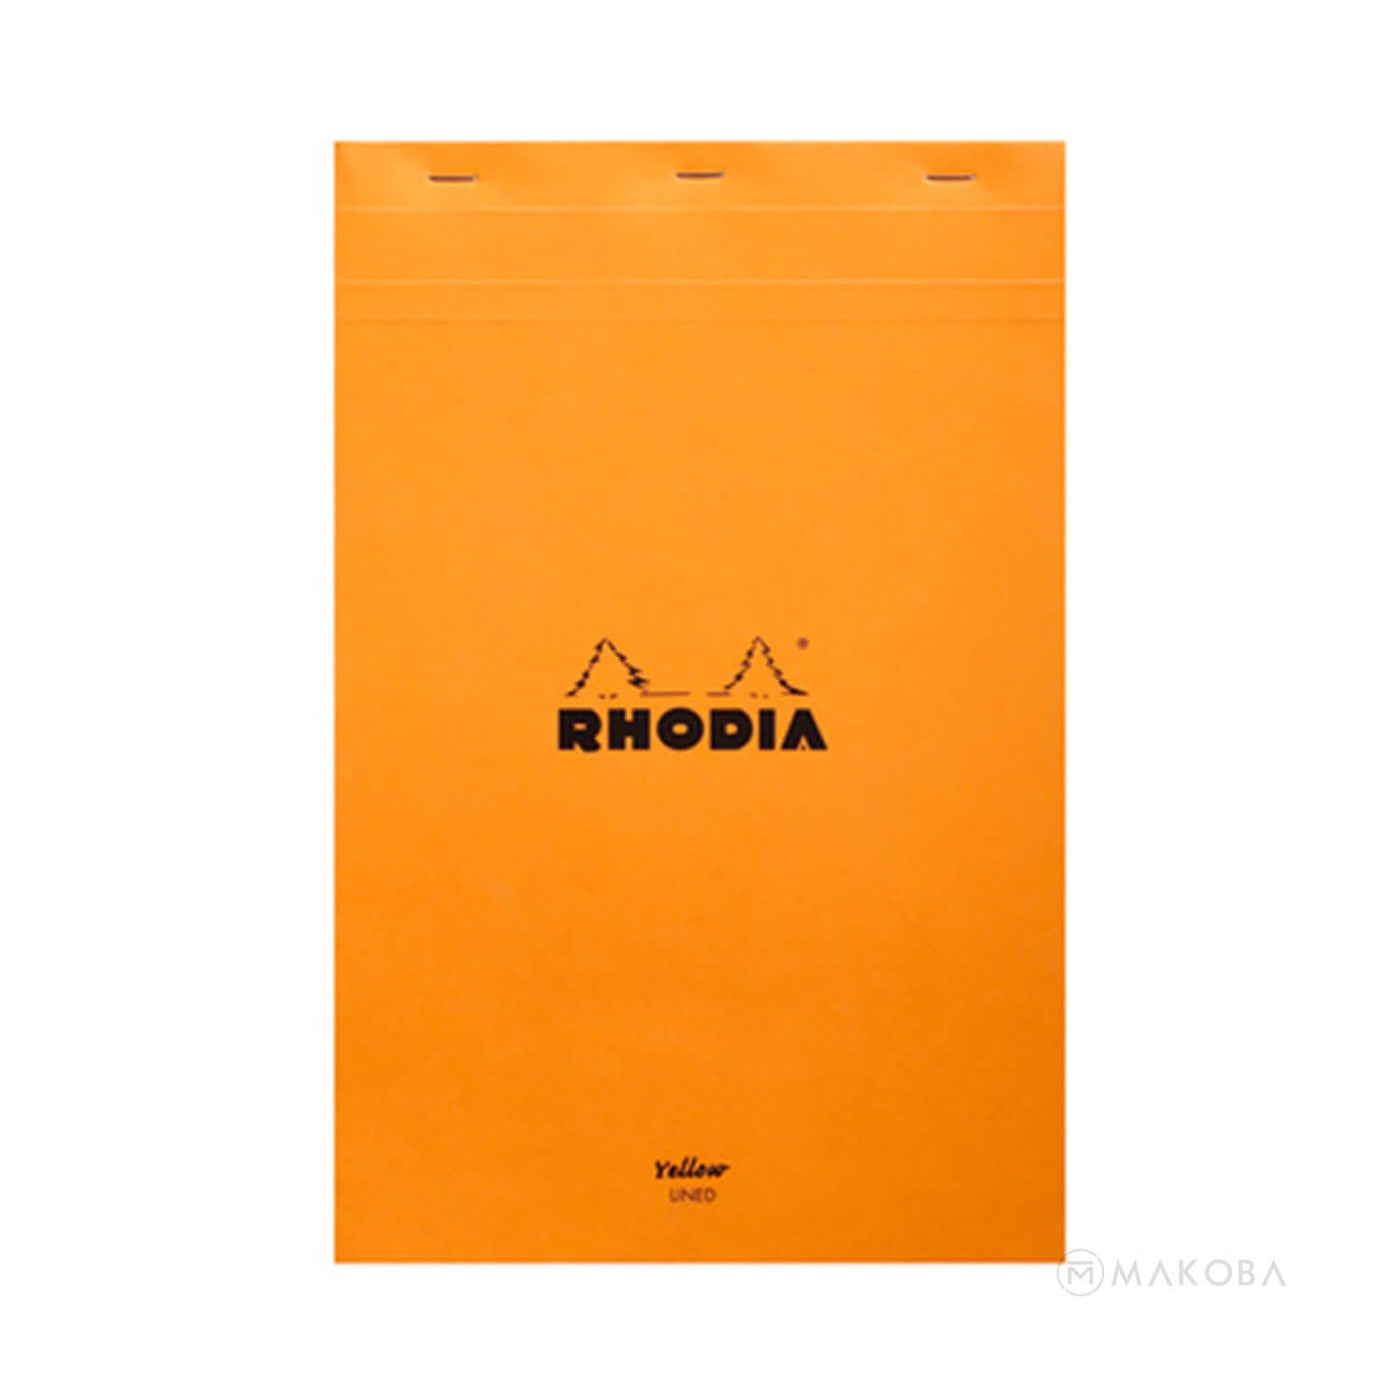 Rhodia Basics Notepad, Orange - Top Stapled 8